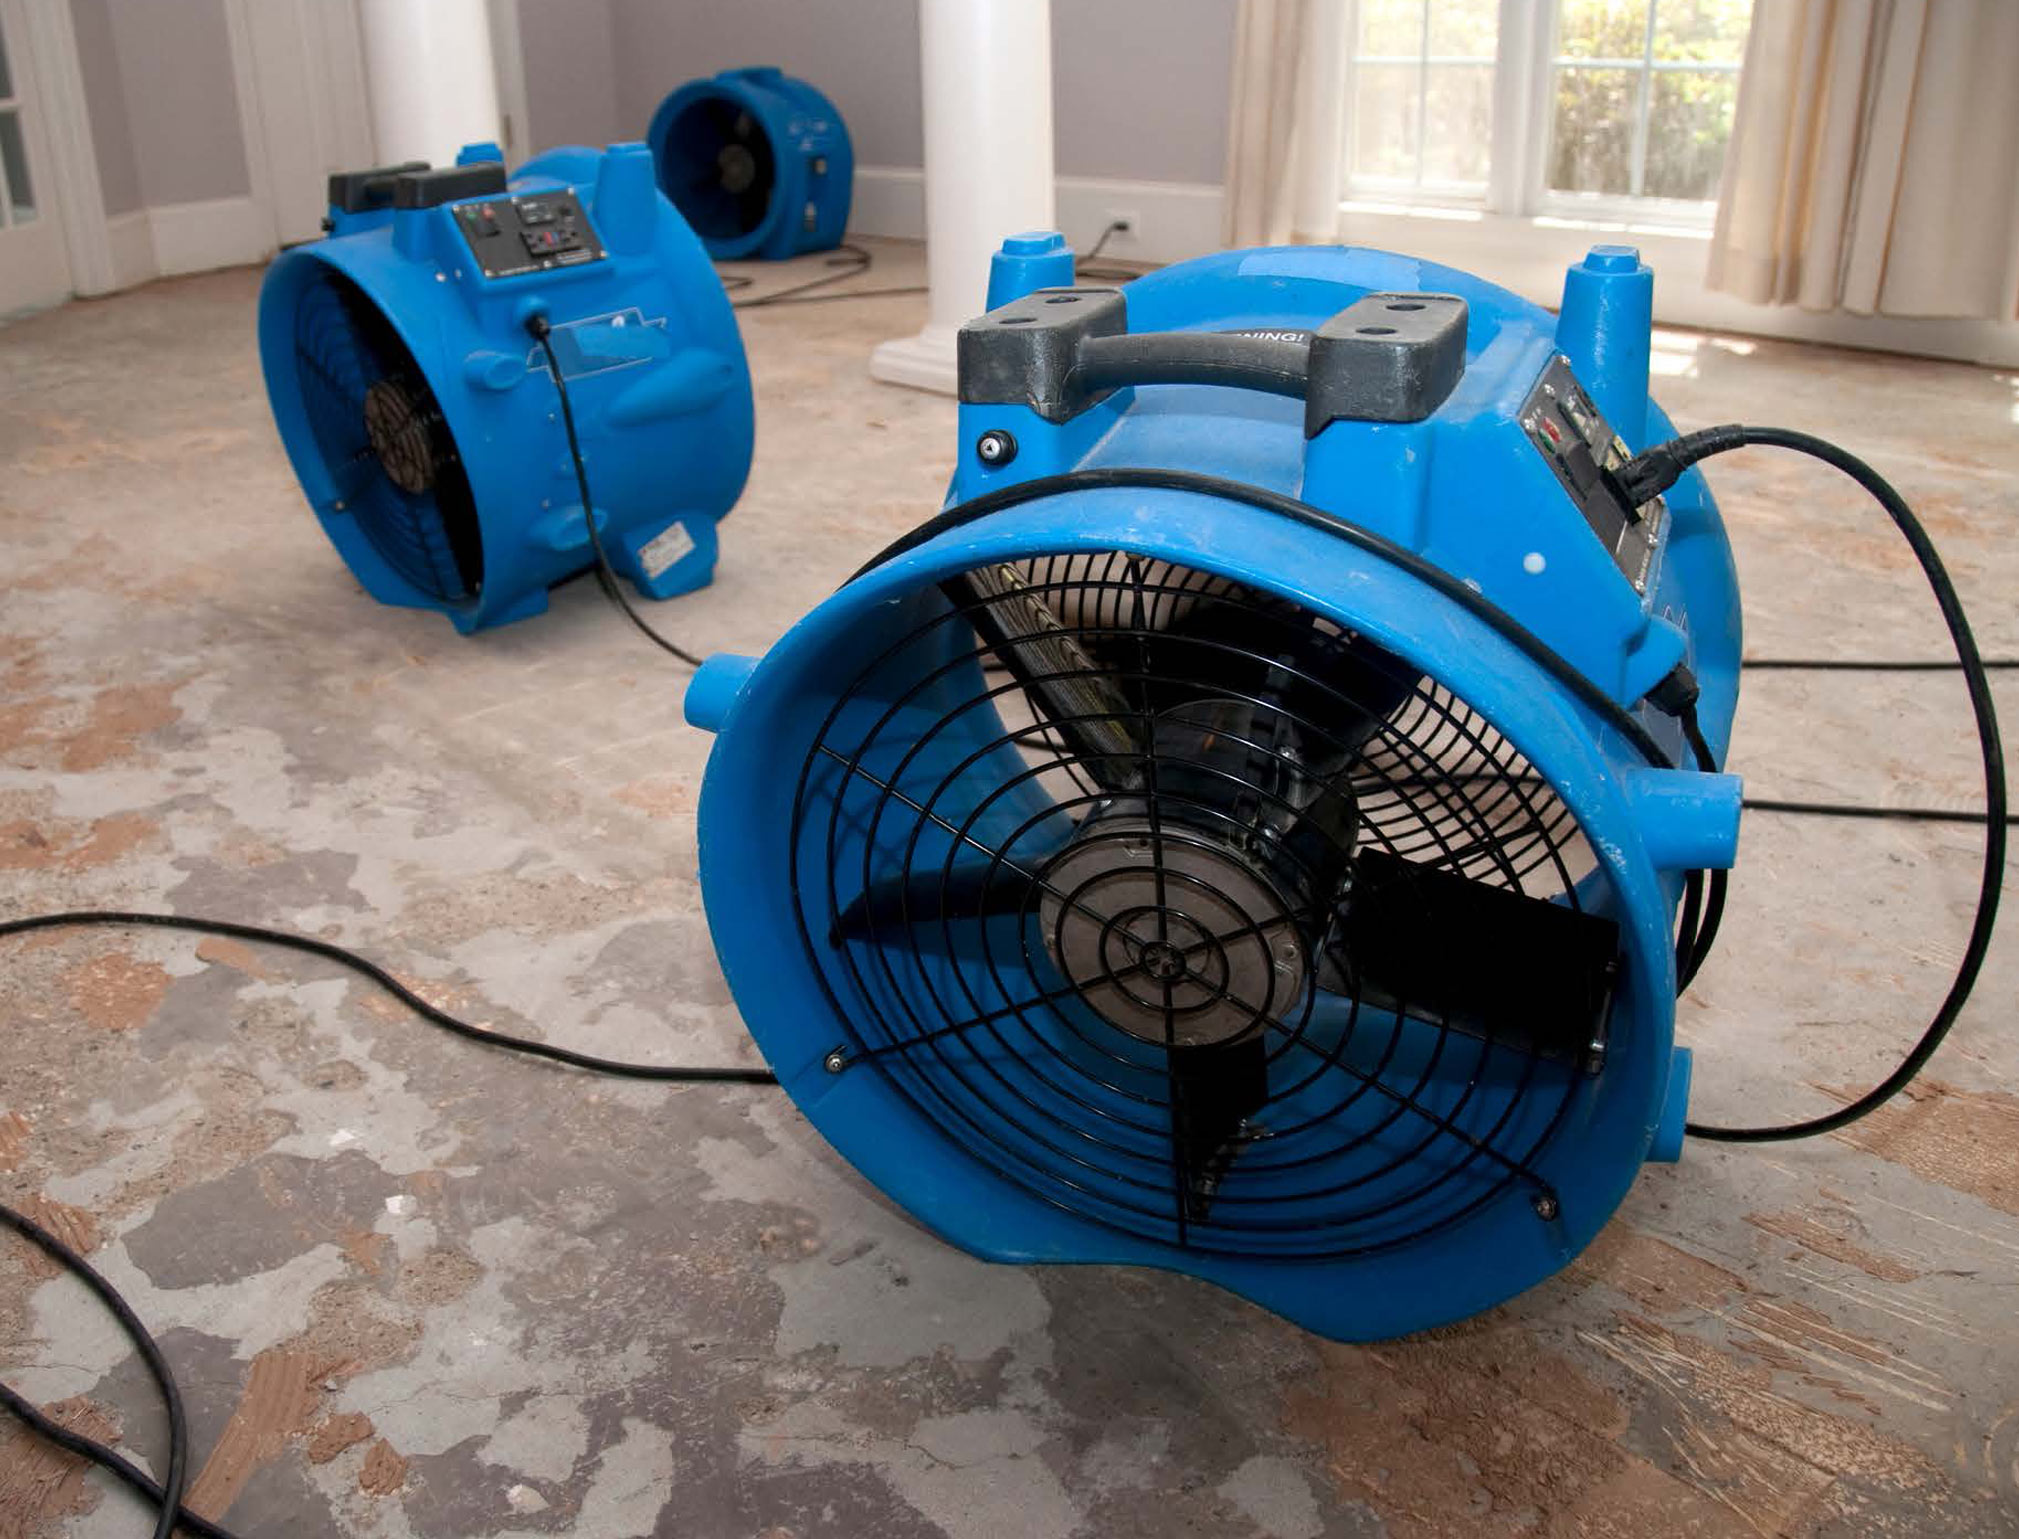 Huge blue commercial floor fans for debris and extreme moisture reduction